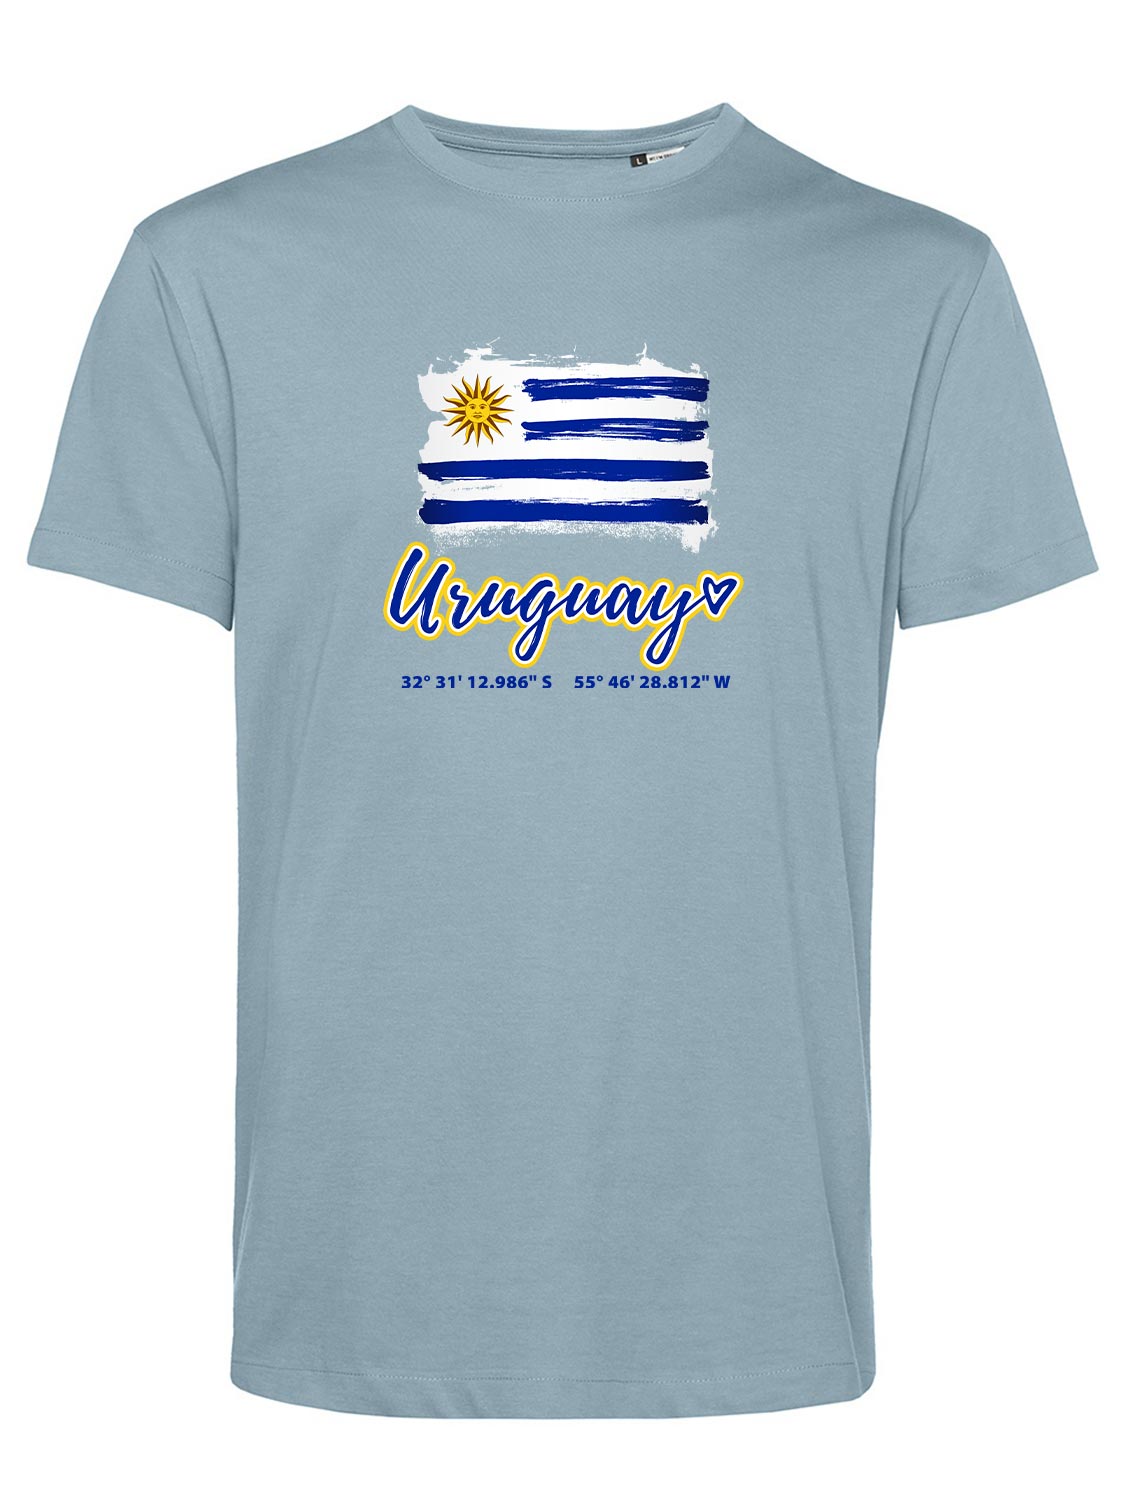 Shirt-Uruguay-1